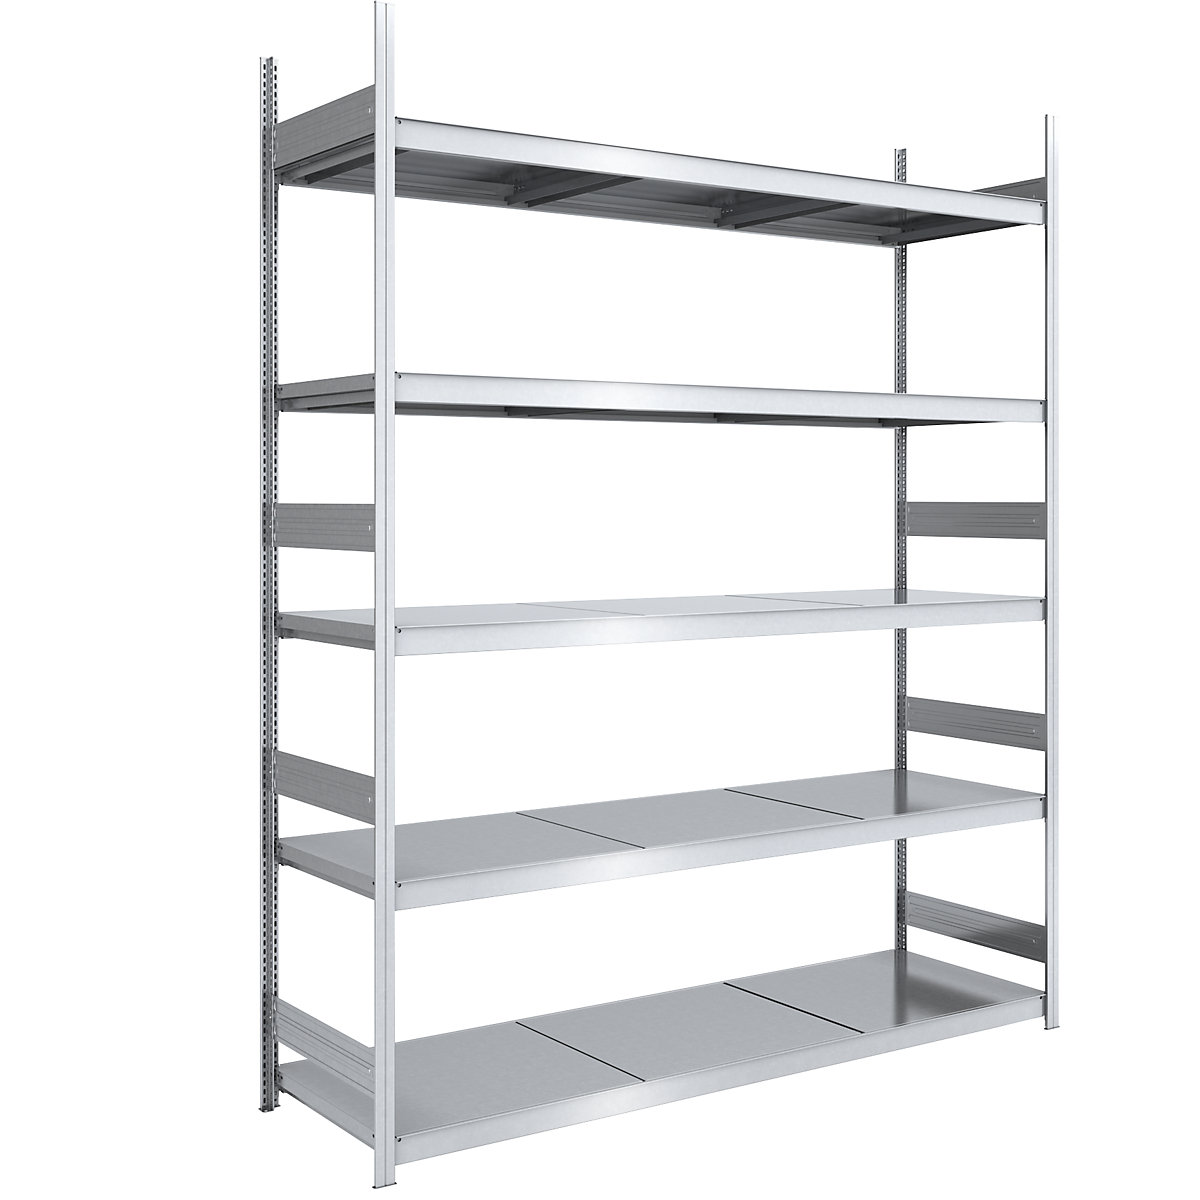 Wide span boltless shelving unit, zinc plated – hofe, shelf WxD 2250 x 800 mm, standard shelf unit, 5 steel shelves, height 3000 mm